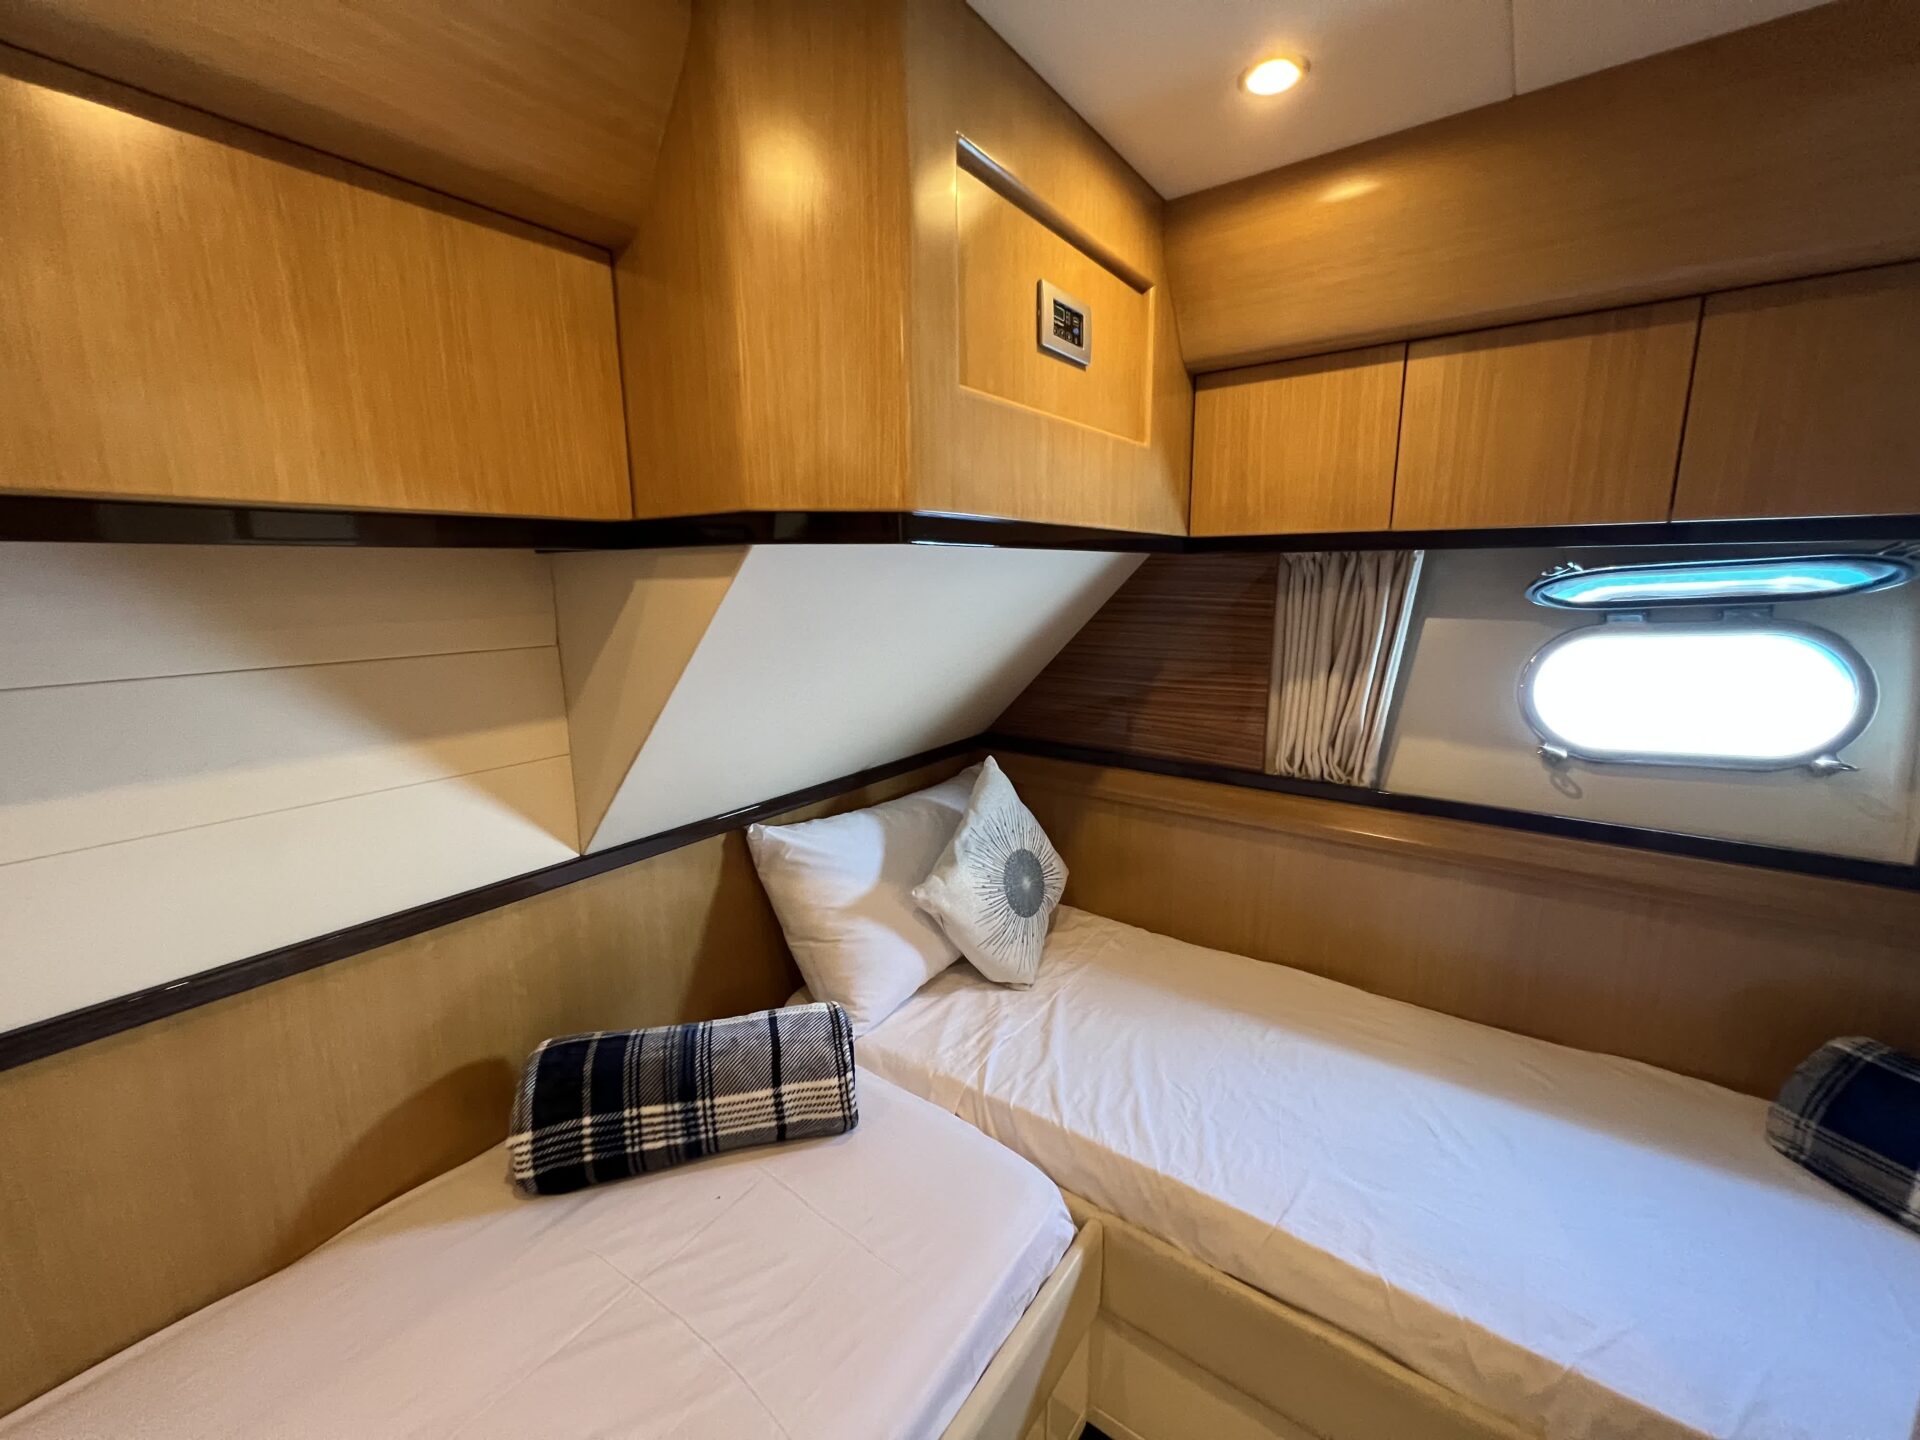 Sarnico 60 - twin bed cabin in L-shape